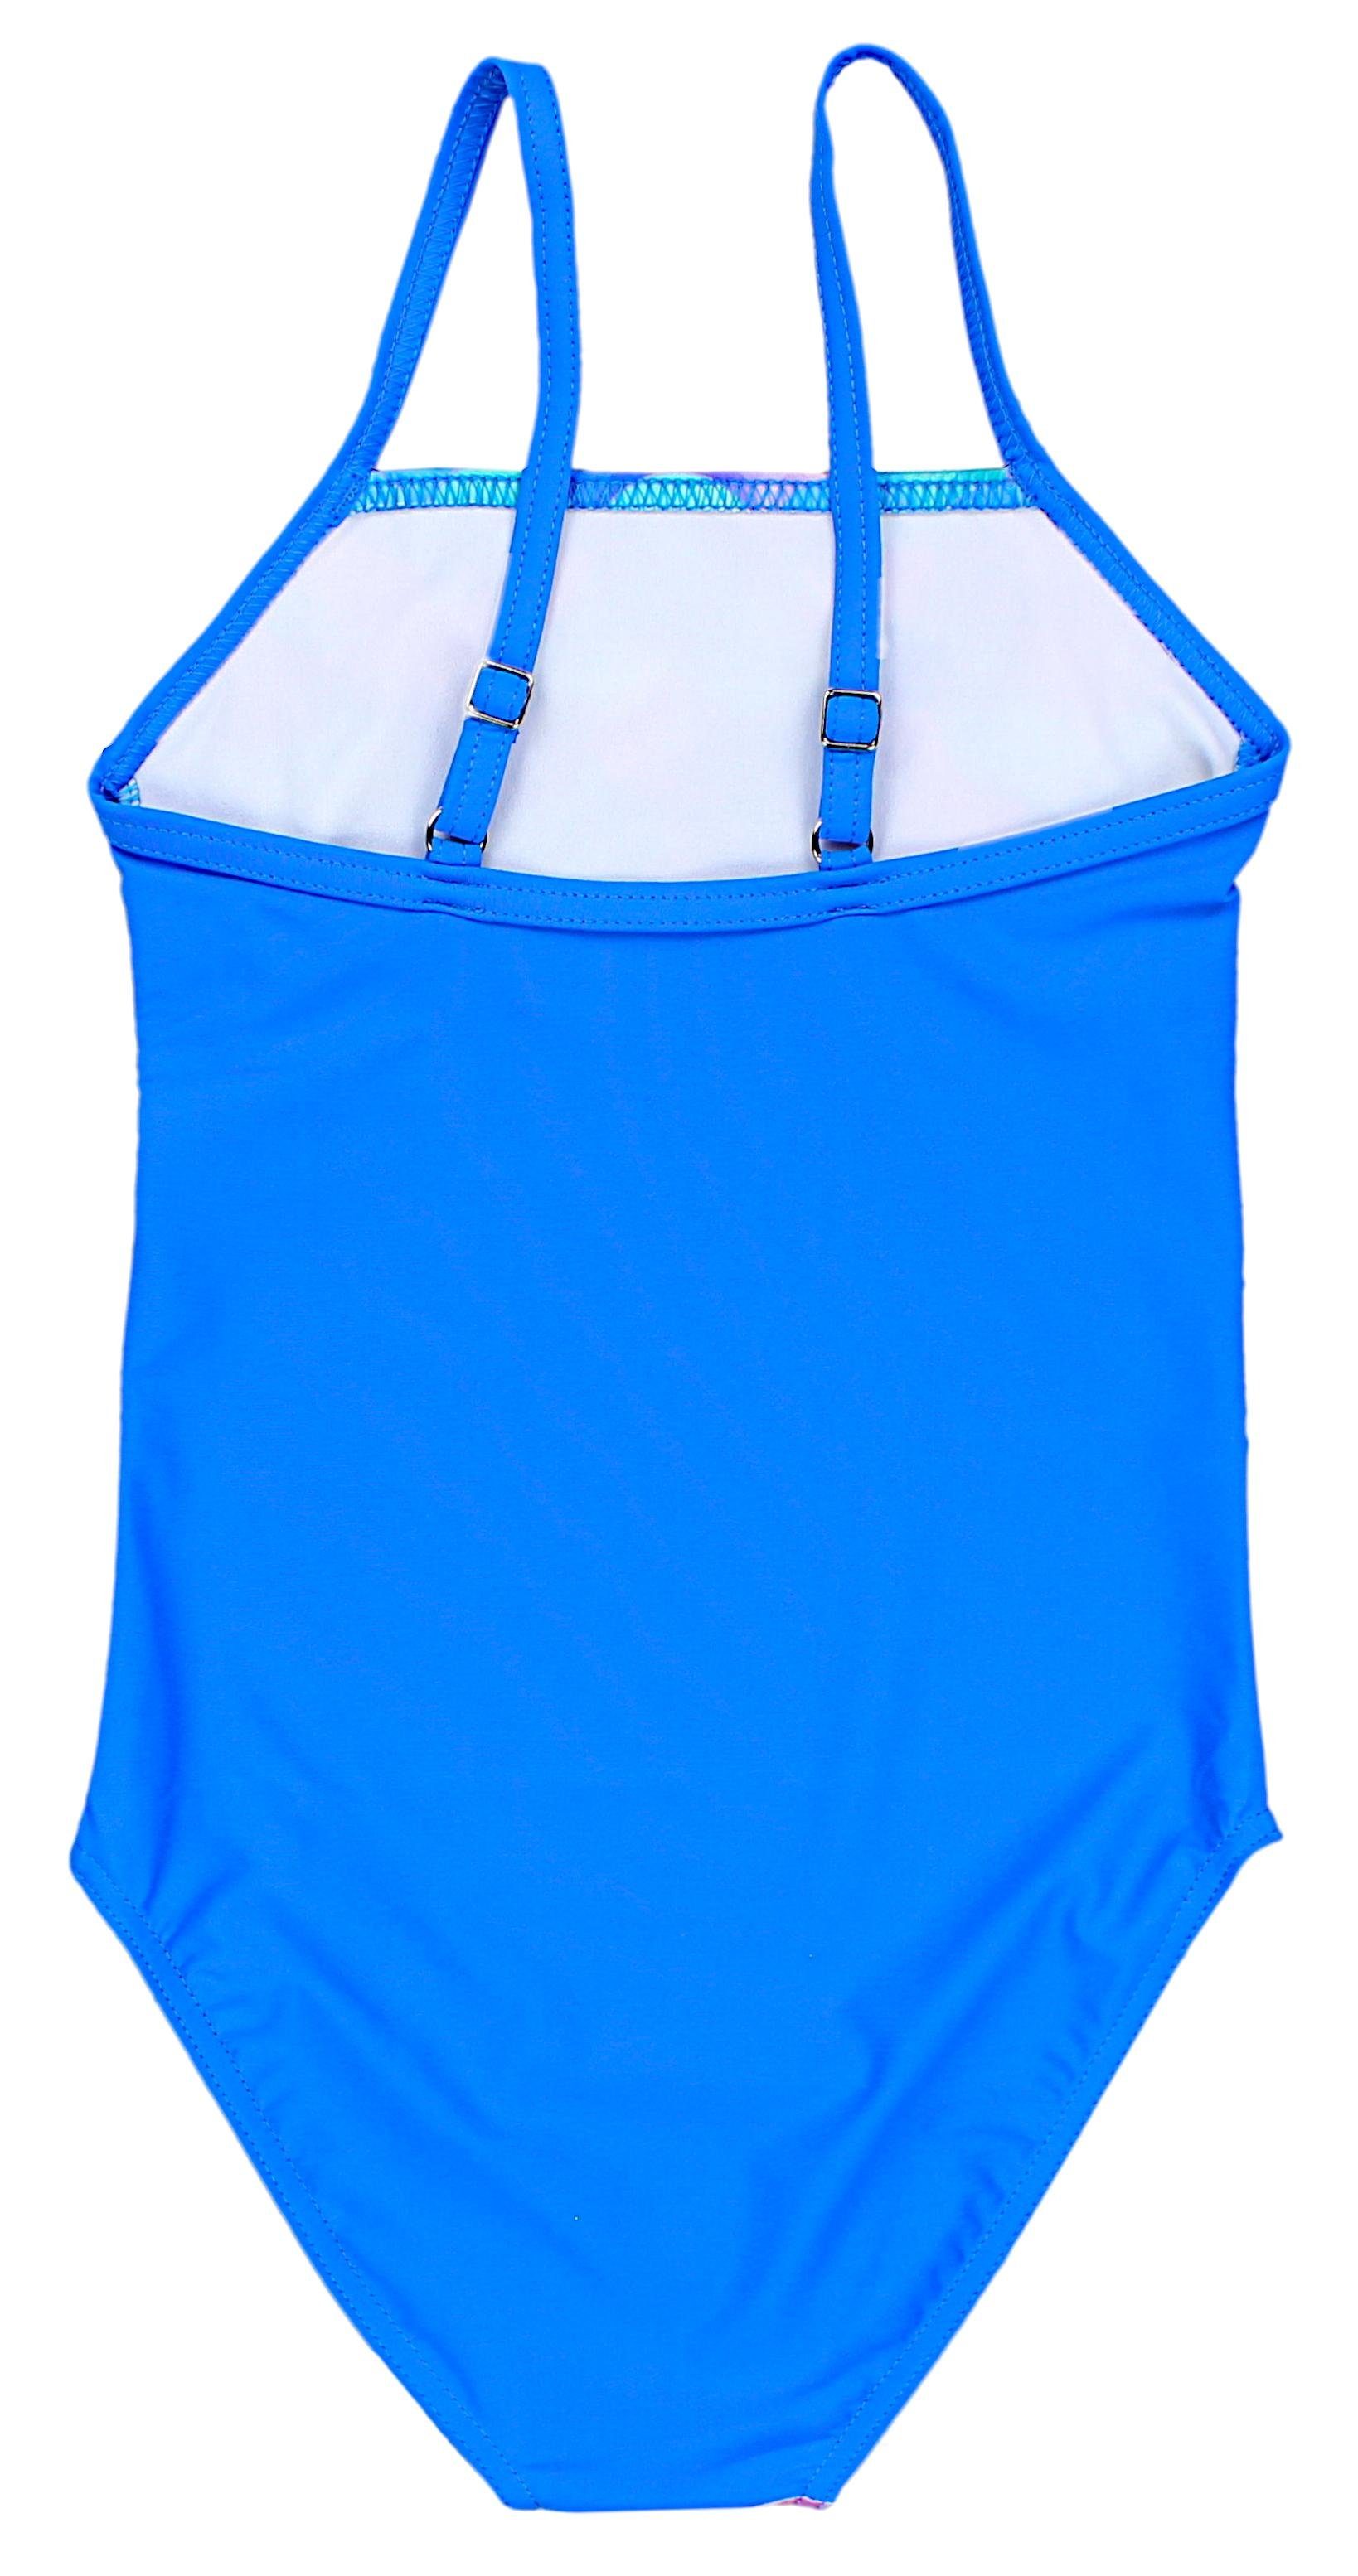 Aquarti Badeanzug Mädchen Aquarti Streifen Badeanzug Spaghettiträgern mit Blau Violett Rosa / / Meerjungfrau